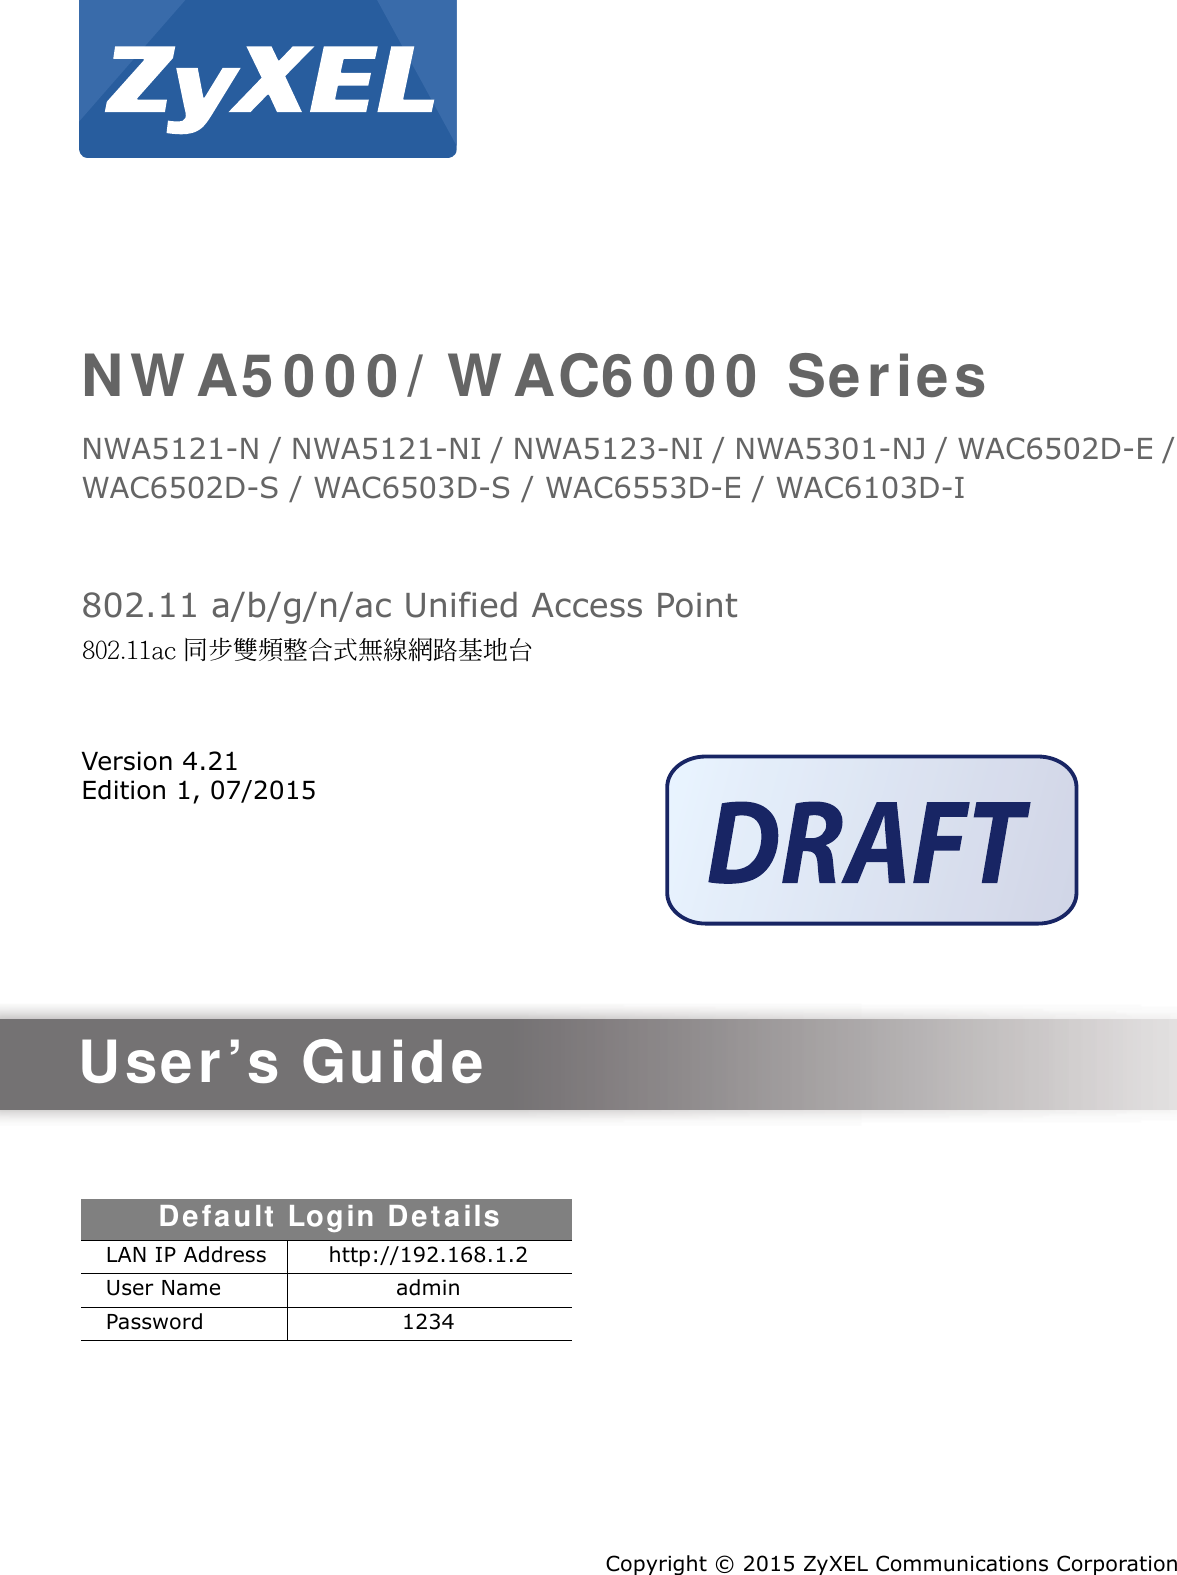 Quick Start Guidewww.zyxel.comN W A5 0 0 0 / W AC6 0 0 0  SeriesNWA5121-N / NWA5121-NI / NWA5123-NI / NWA5301-NJ / WAC6502D-E / WAC6502D-S / WAC6503D-S / WAC6553D-E / WAC6103D-I802.11 a/b/g/n/ac Unified Access PointVersion 4.21Edition 1, 07/2015Copyright © 2015 ZyXEL Communications CorporationUser’s GuideDefault  Login De t ailsLAN IP Address http://192.168.1.2User Name adminPassword 1234802.11ac 同步雙頻整合式無線網路基地台